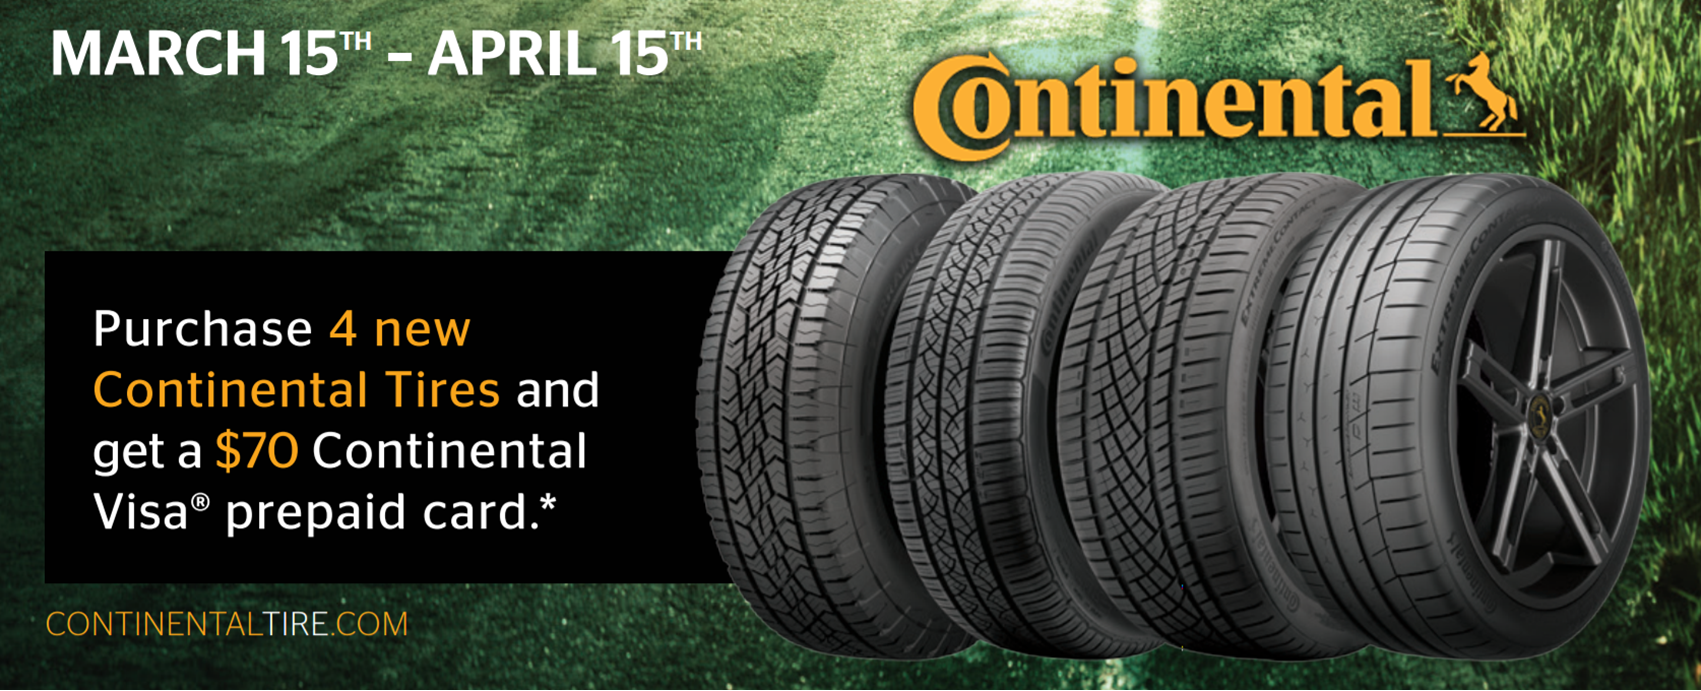 continental-tire-rebates-70-end-april-15th